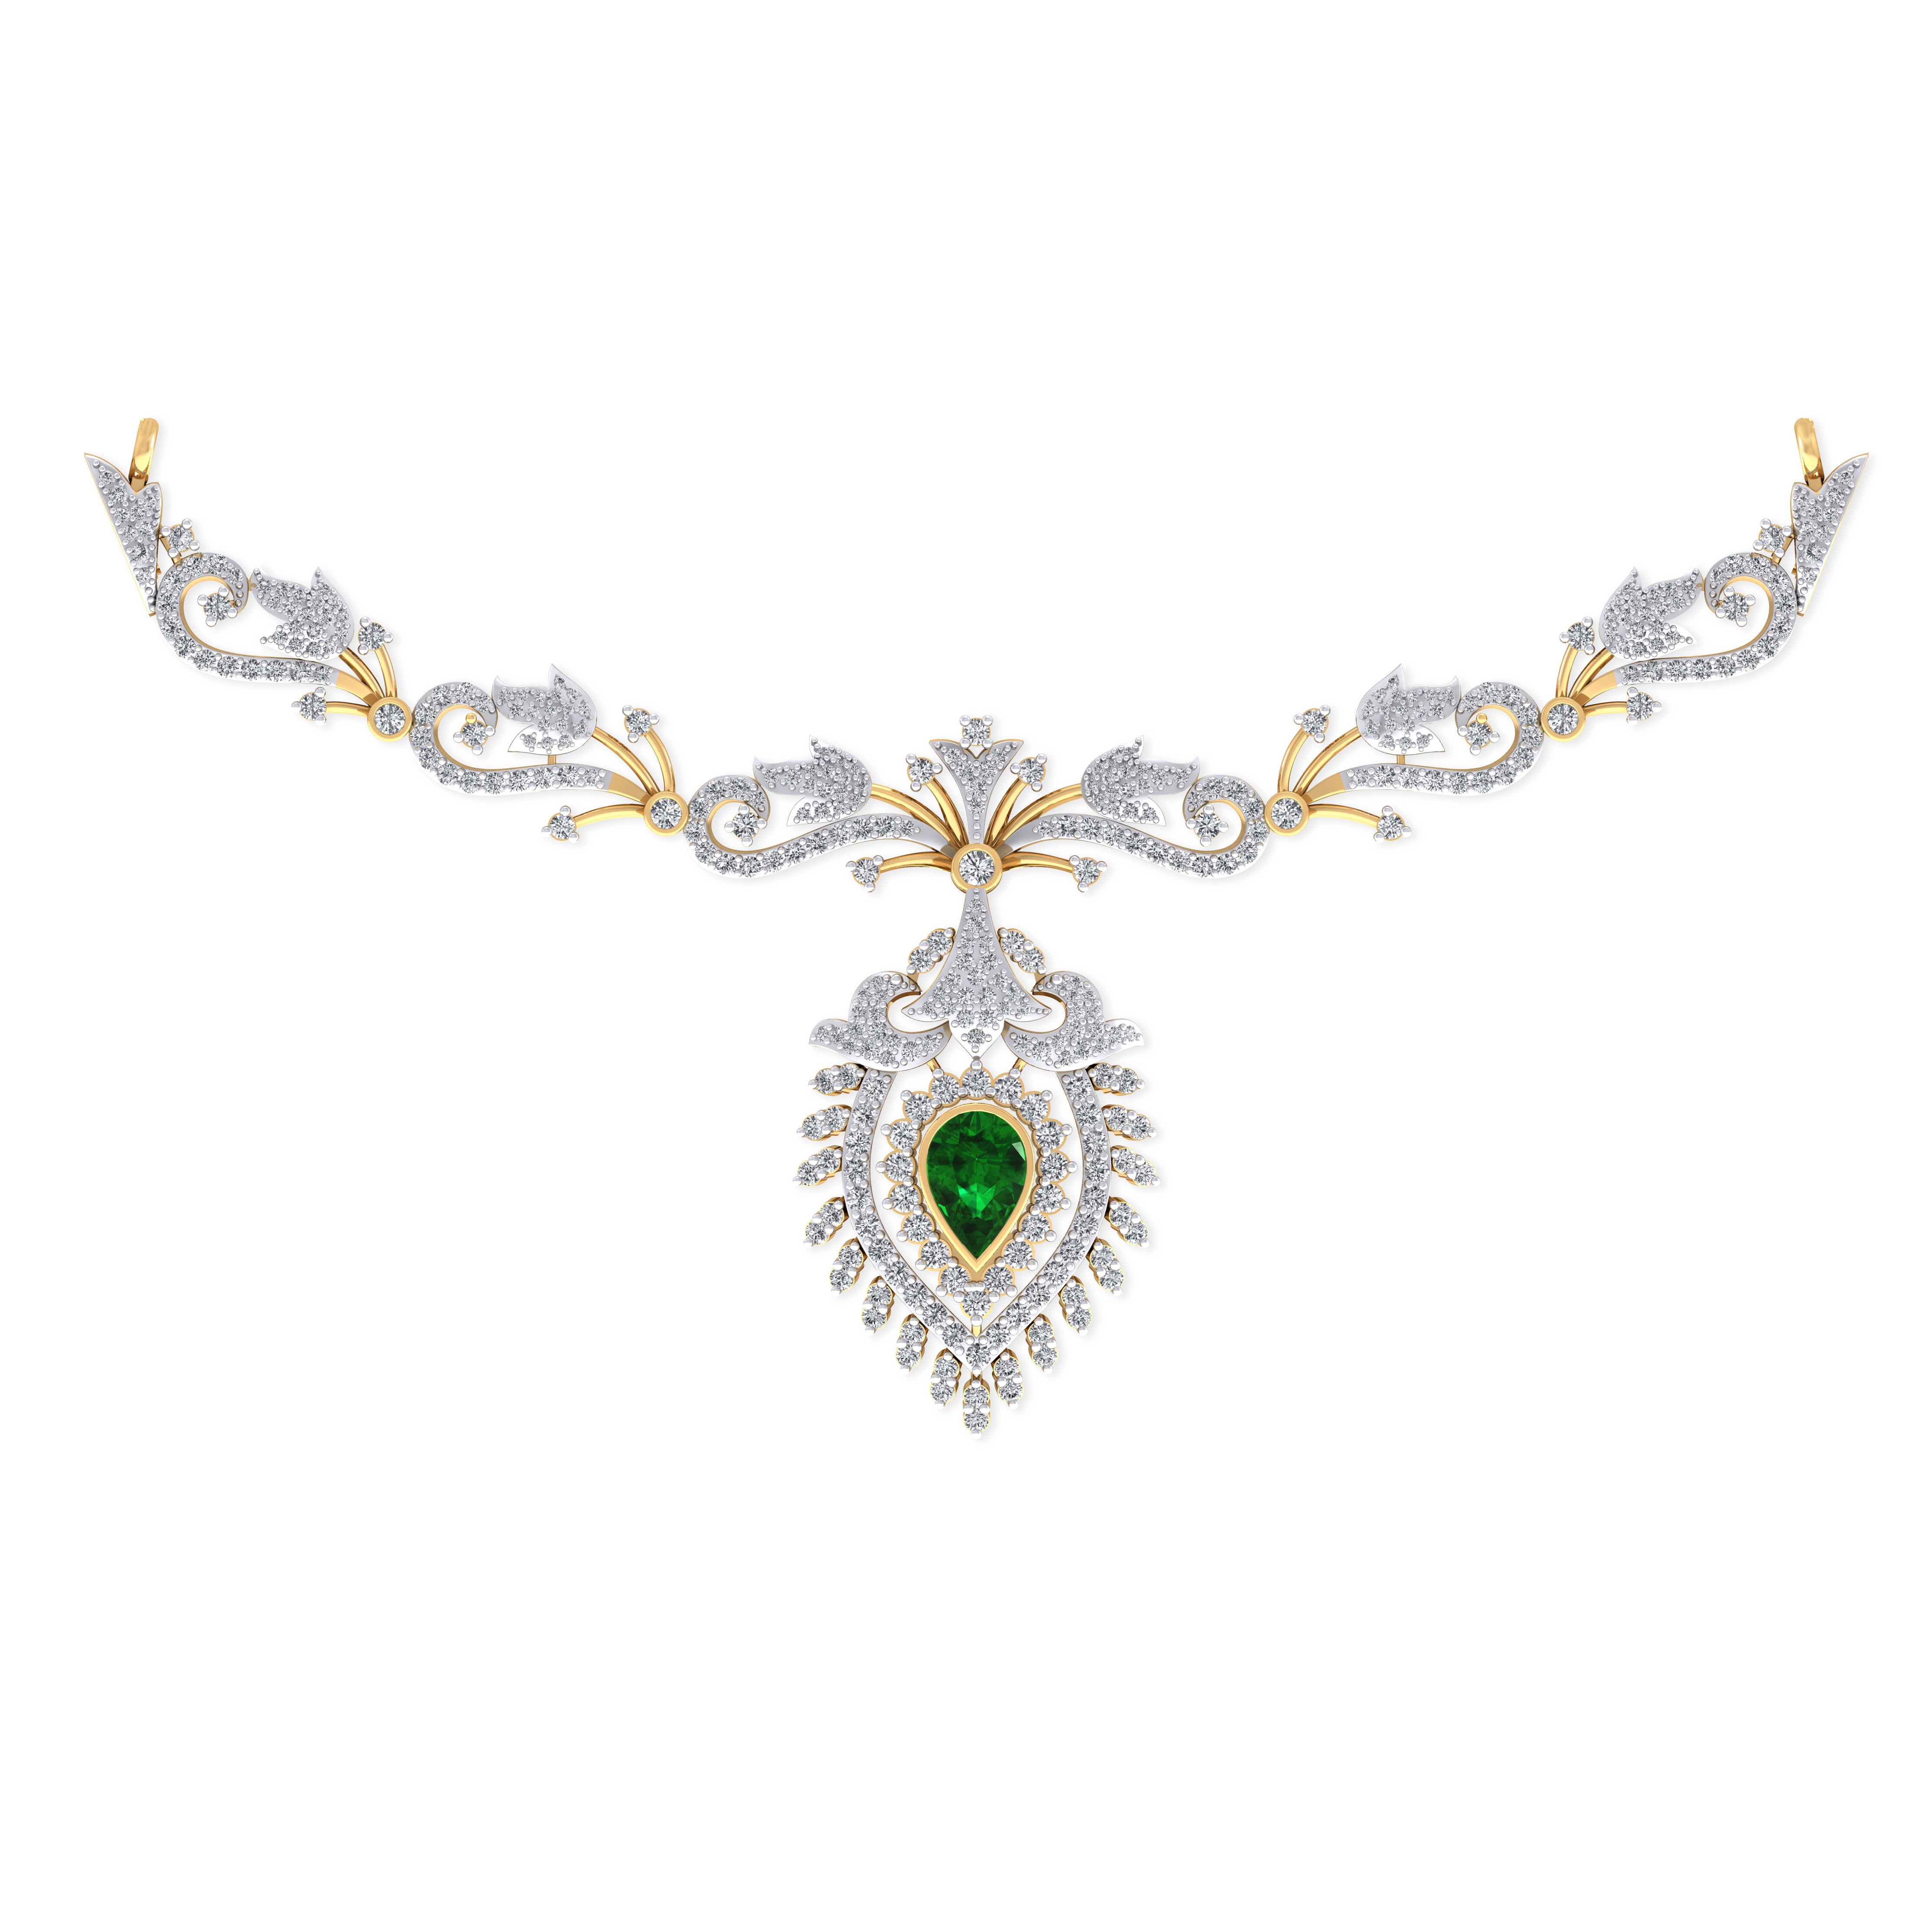 The Jerzie Diamond Necklace